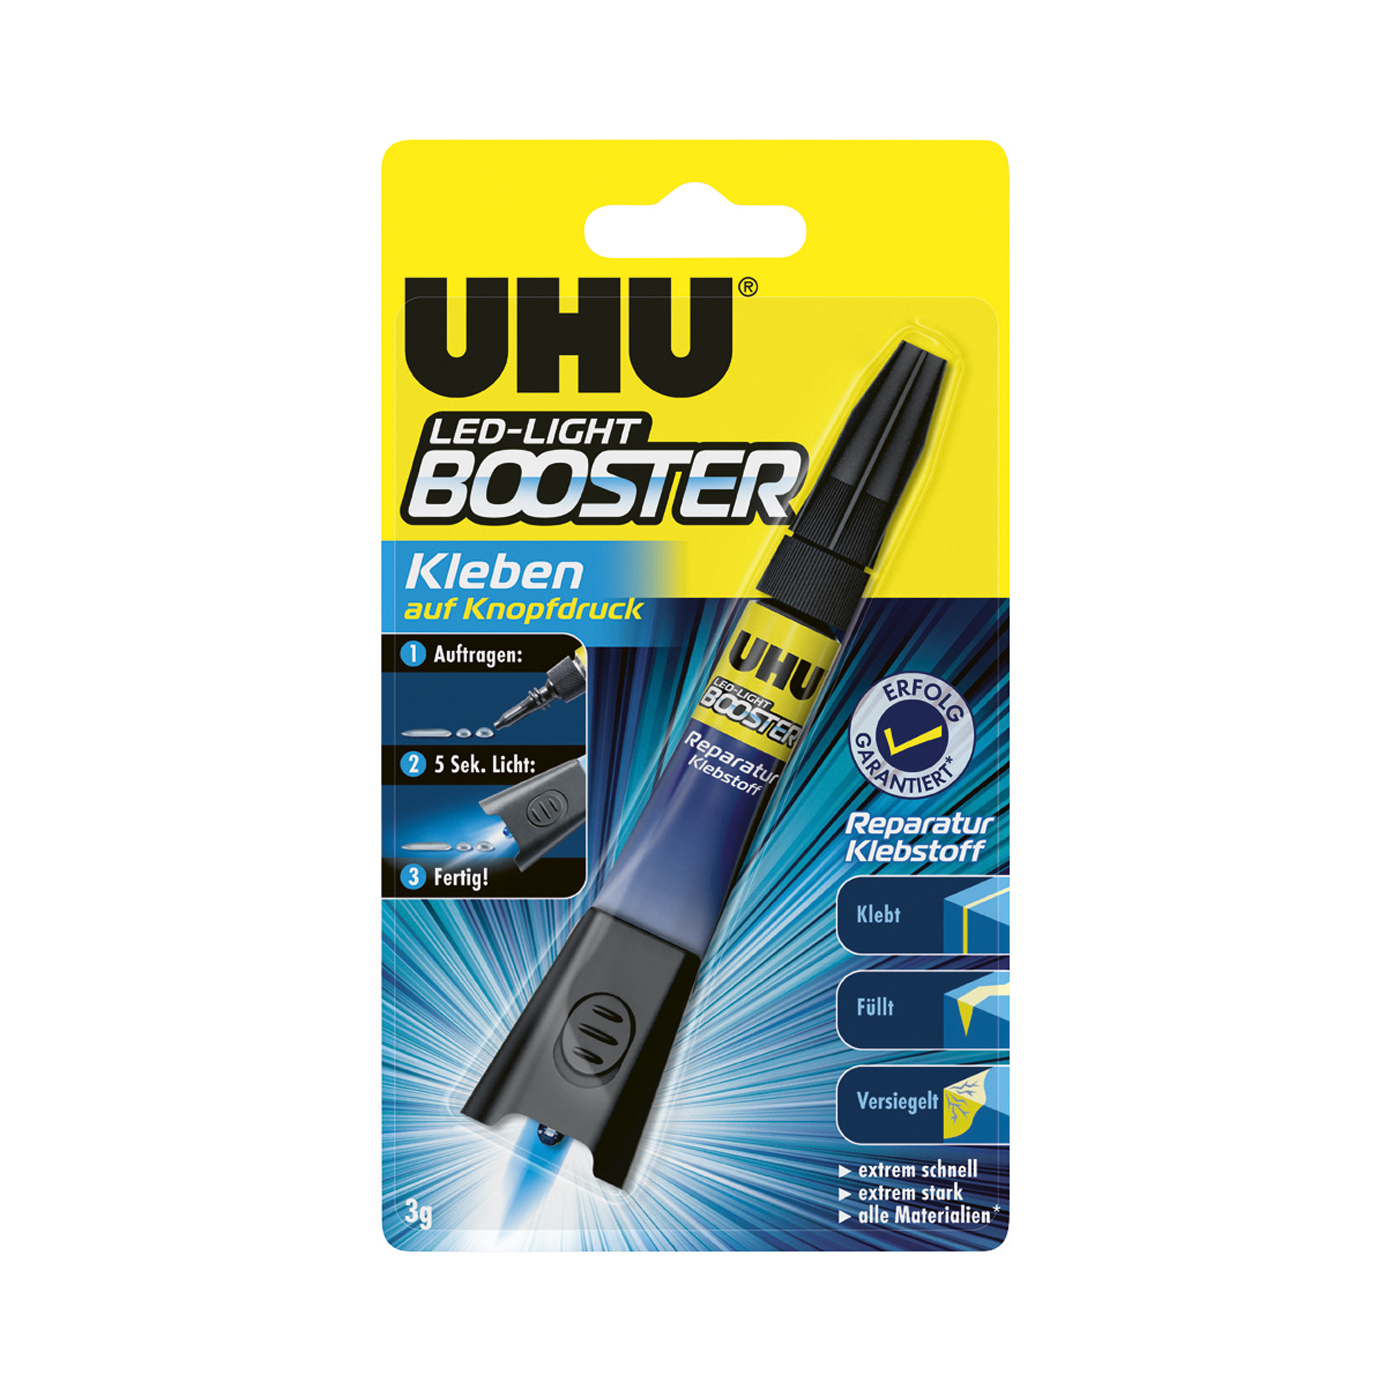 UHU LED-Light Booster Reparatur-Klebstoff - 3 g